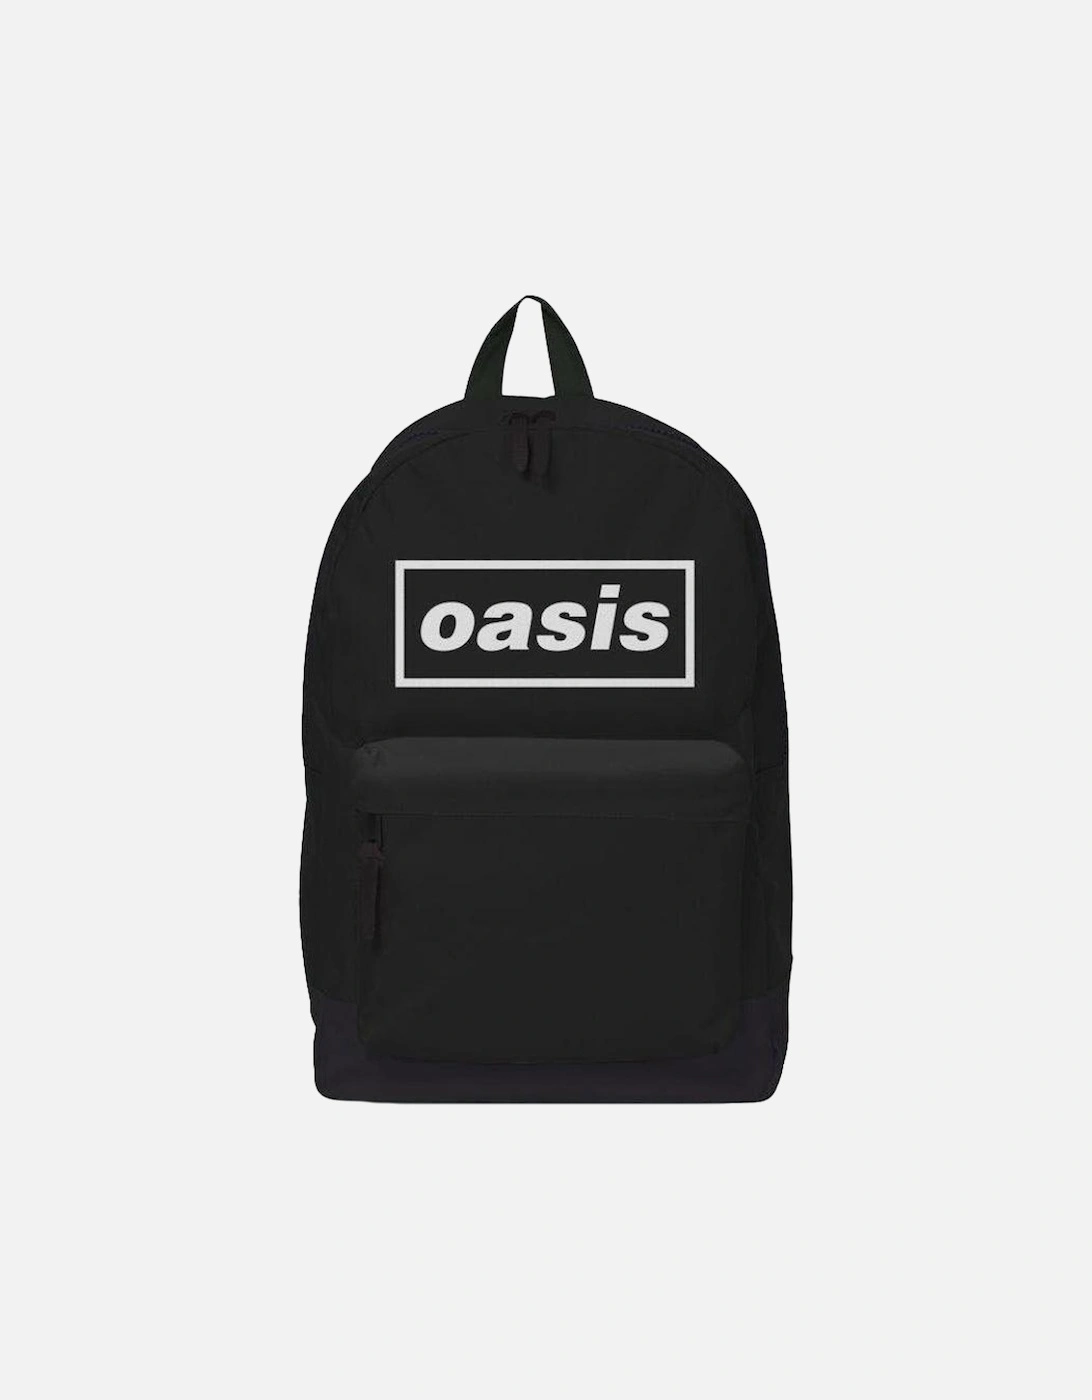 Logo Oasis Backpack, 2 of 1